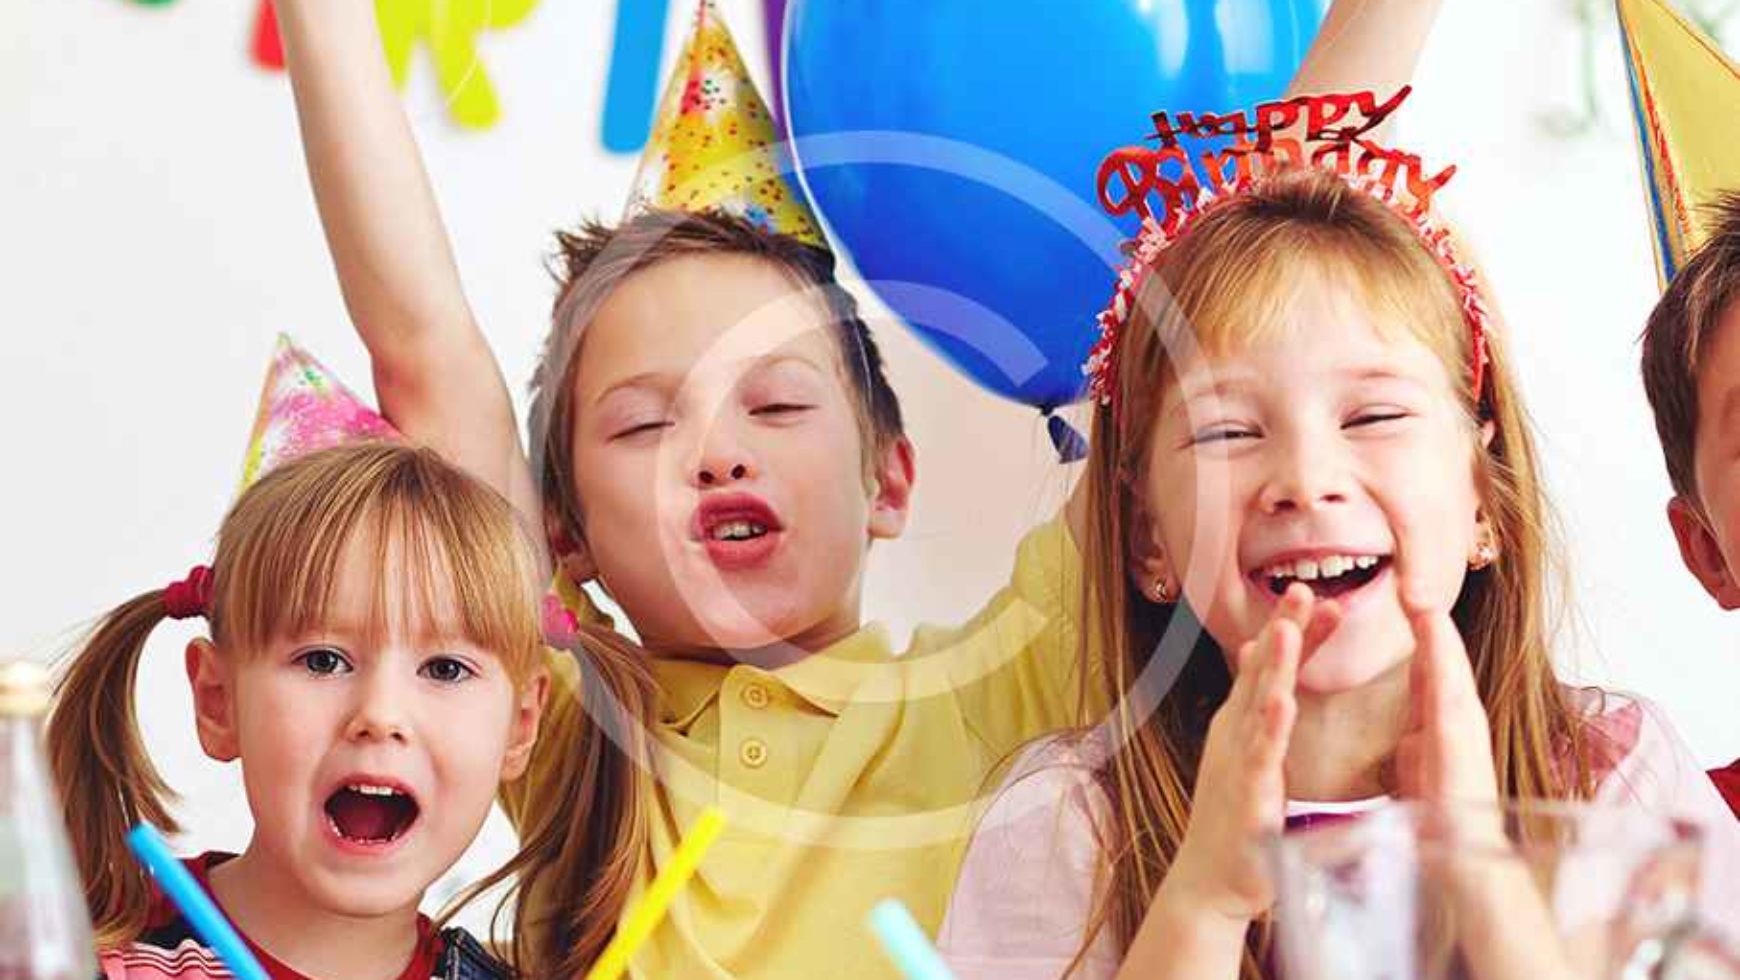 Planning Kids’ Birthday Parties